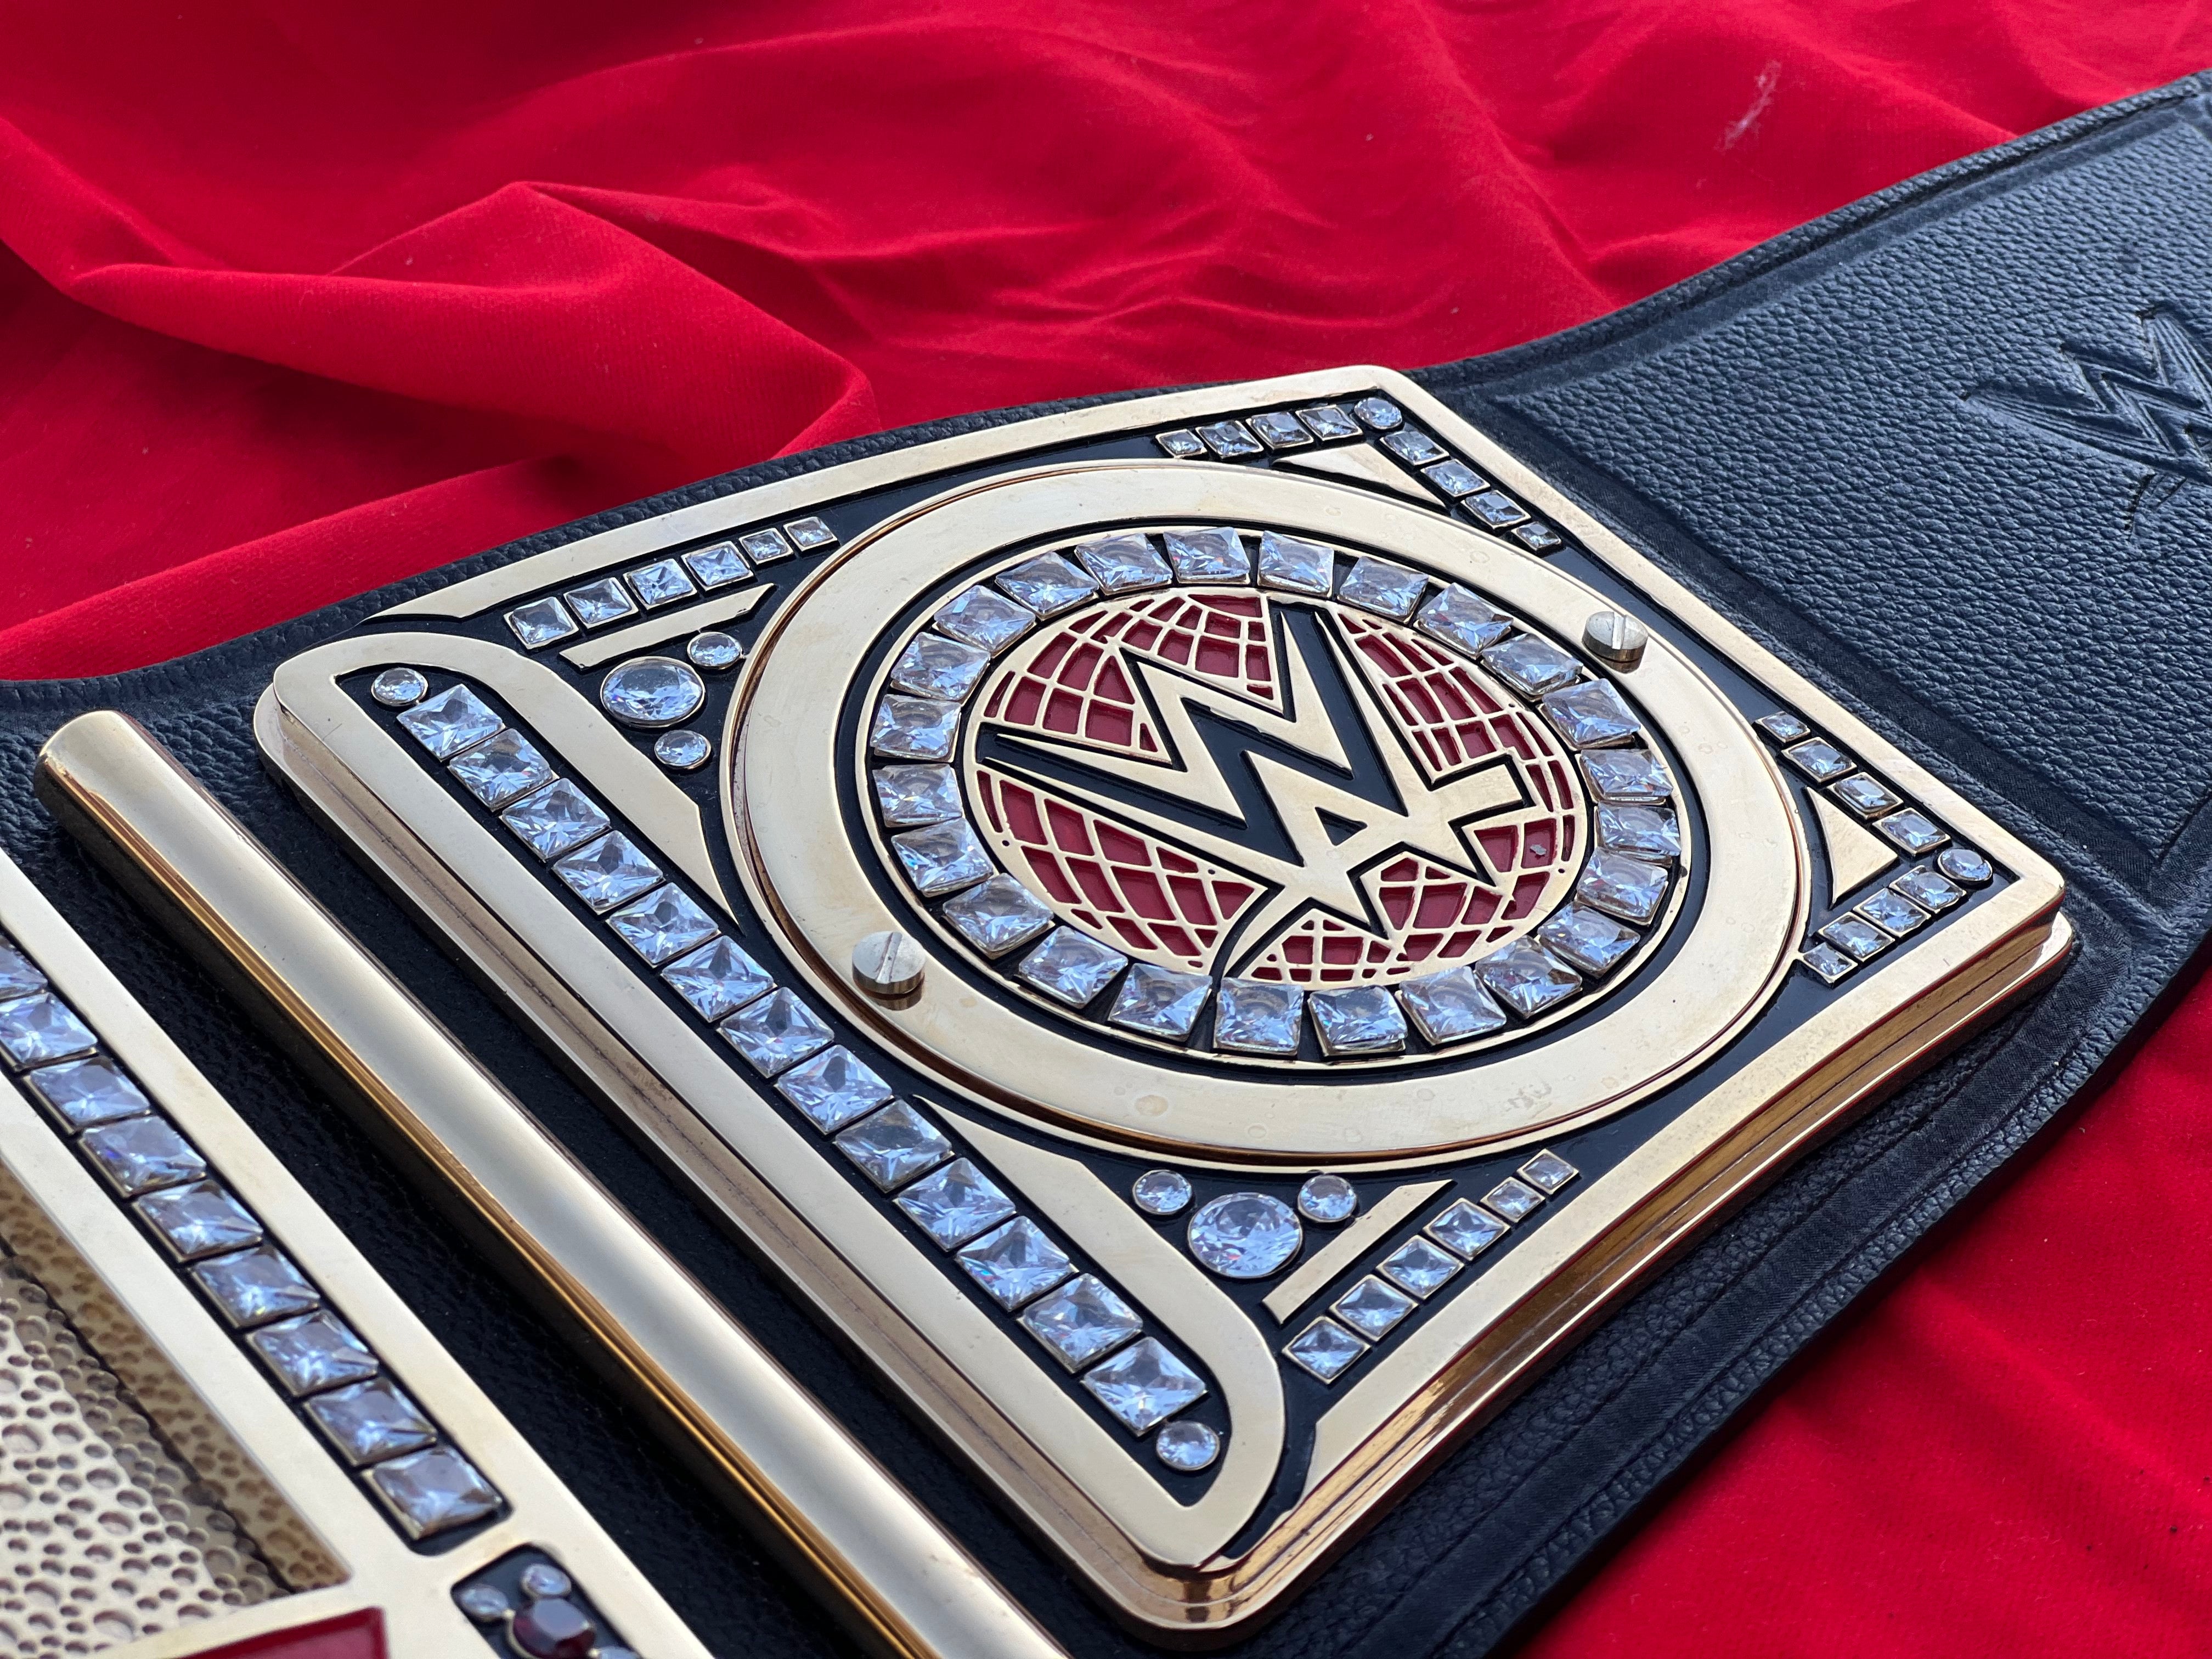 WWE Undisputed Premium CNC Championship Belt